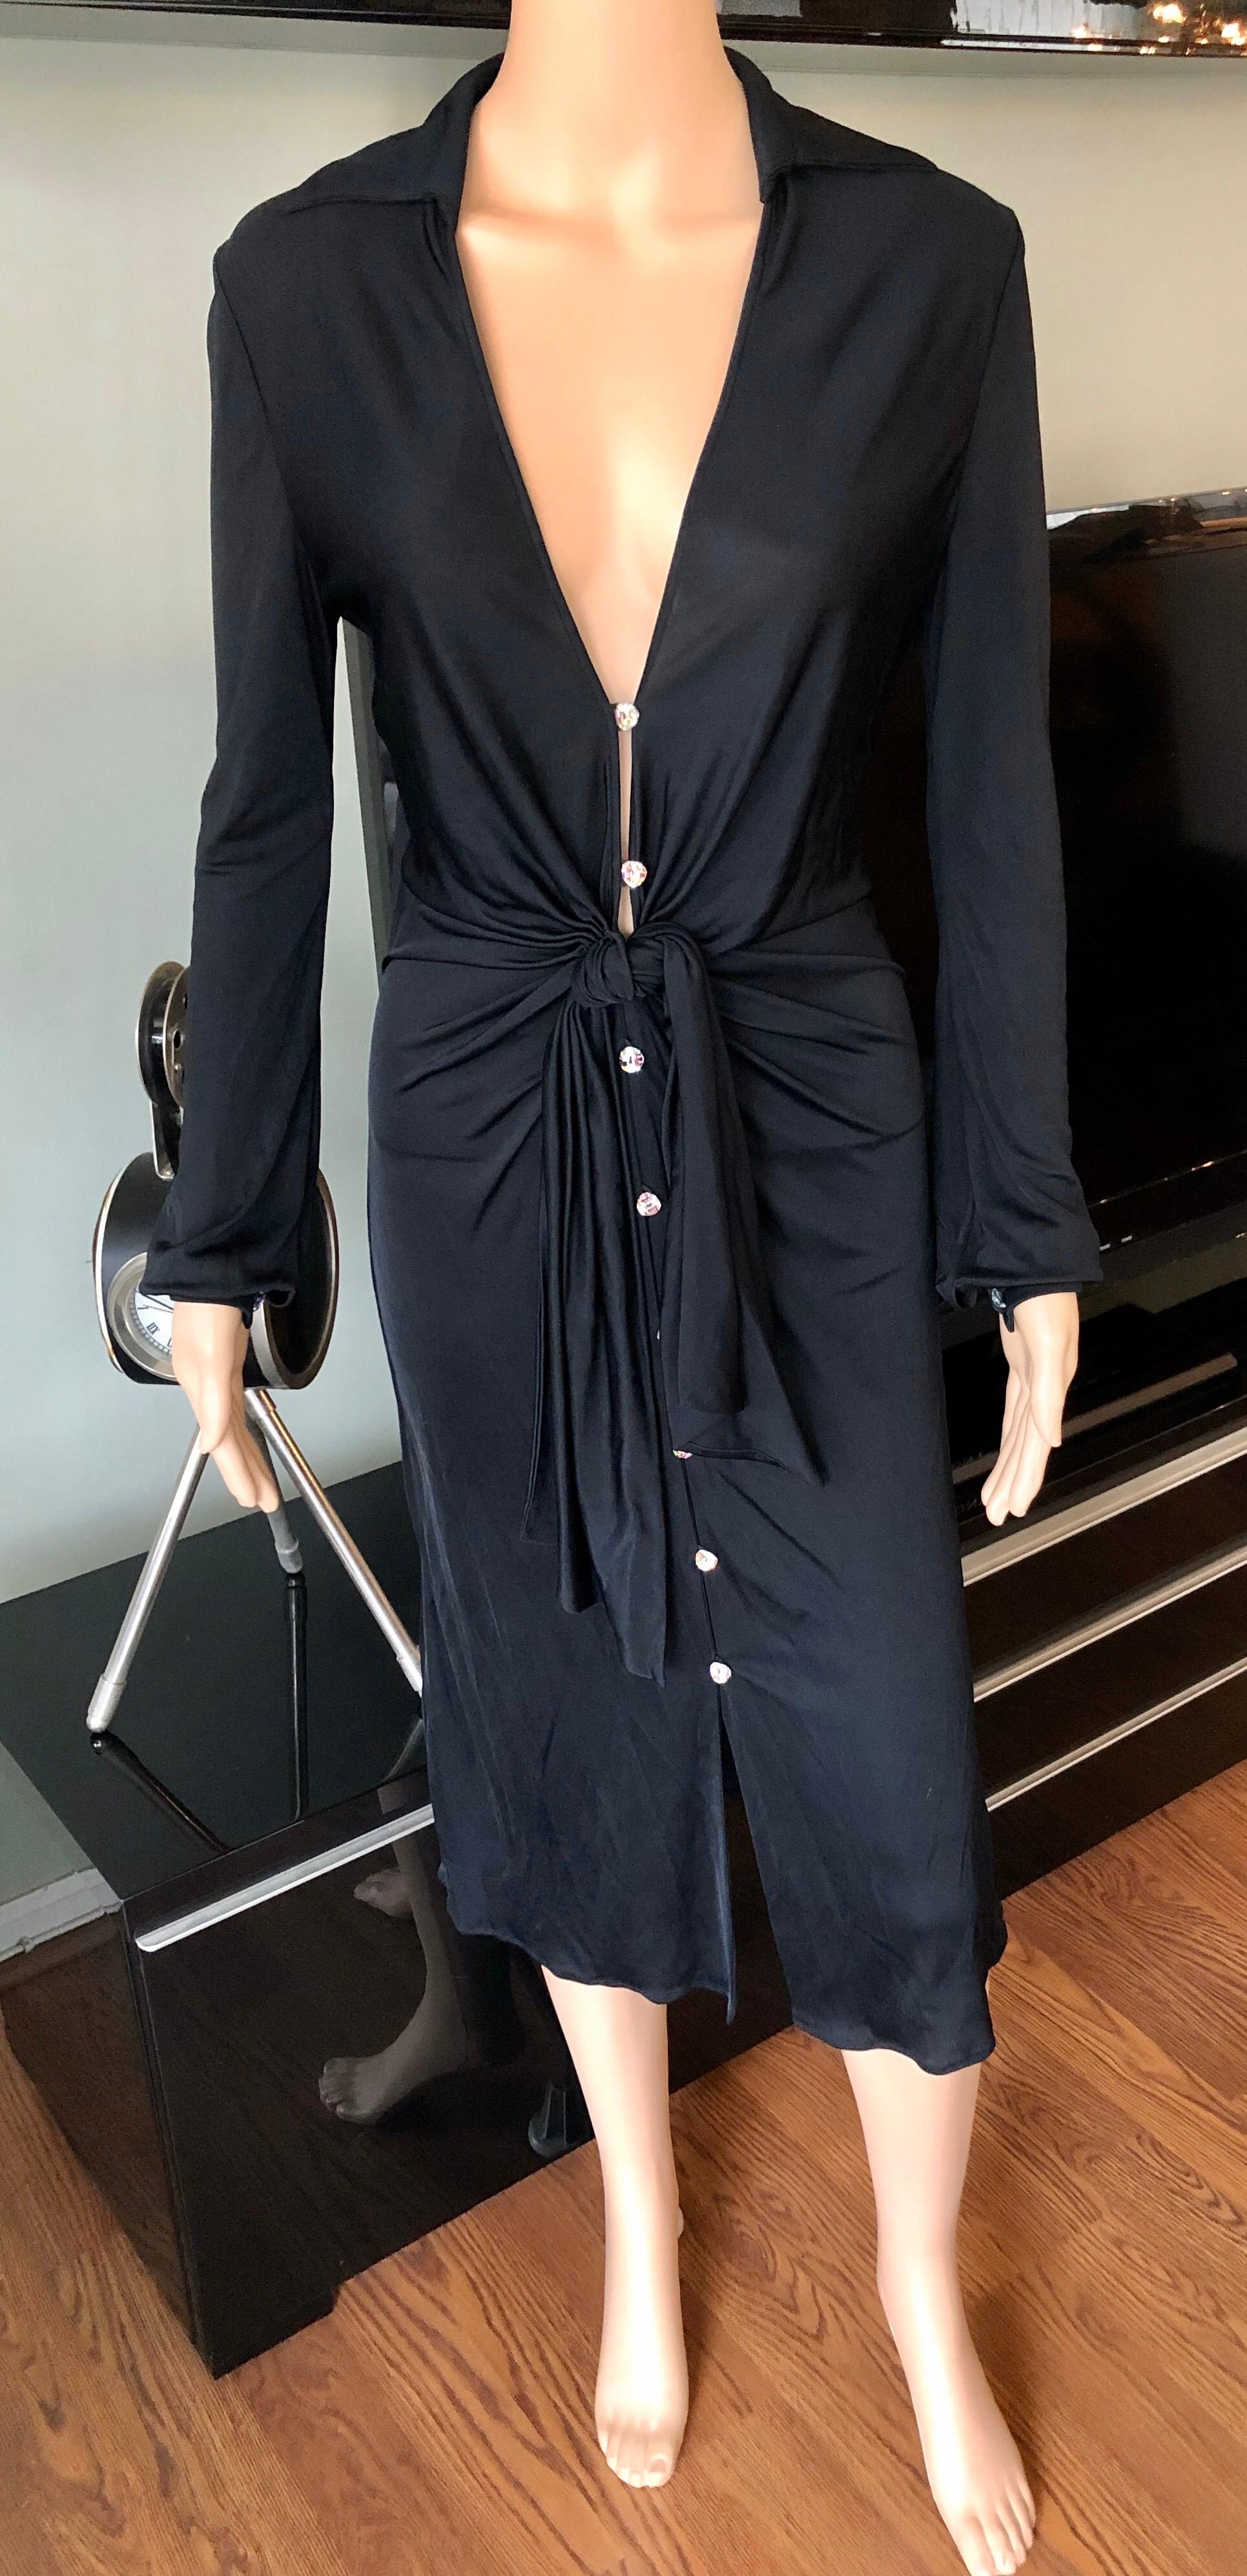 Women's Gianni Versace S/S 2000 Runway Vintage Plunging Neckline Black Dress  For Sale